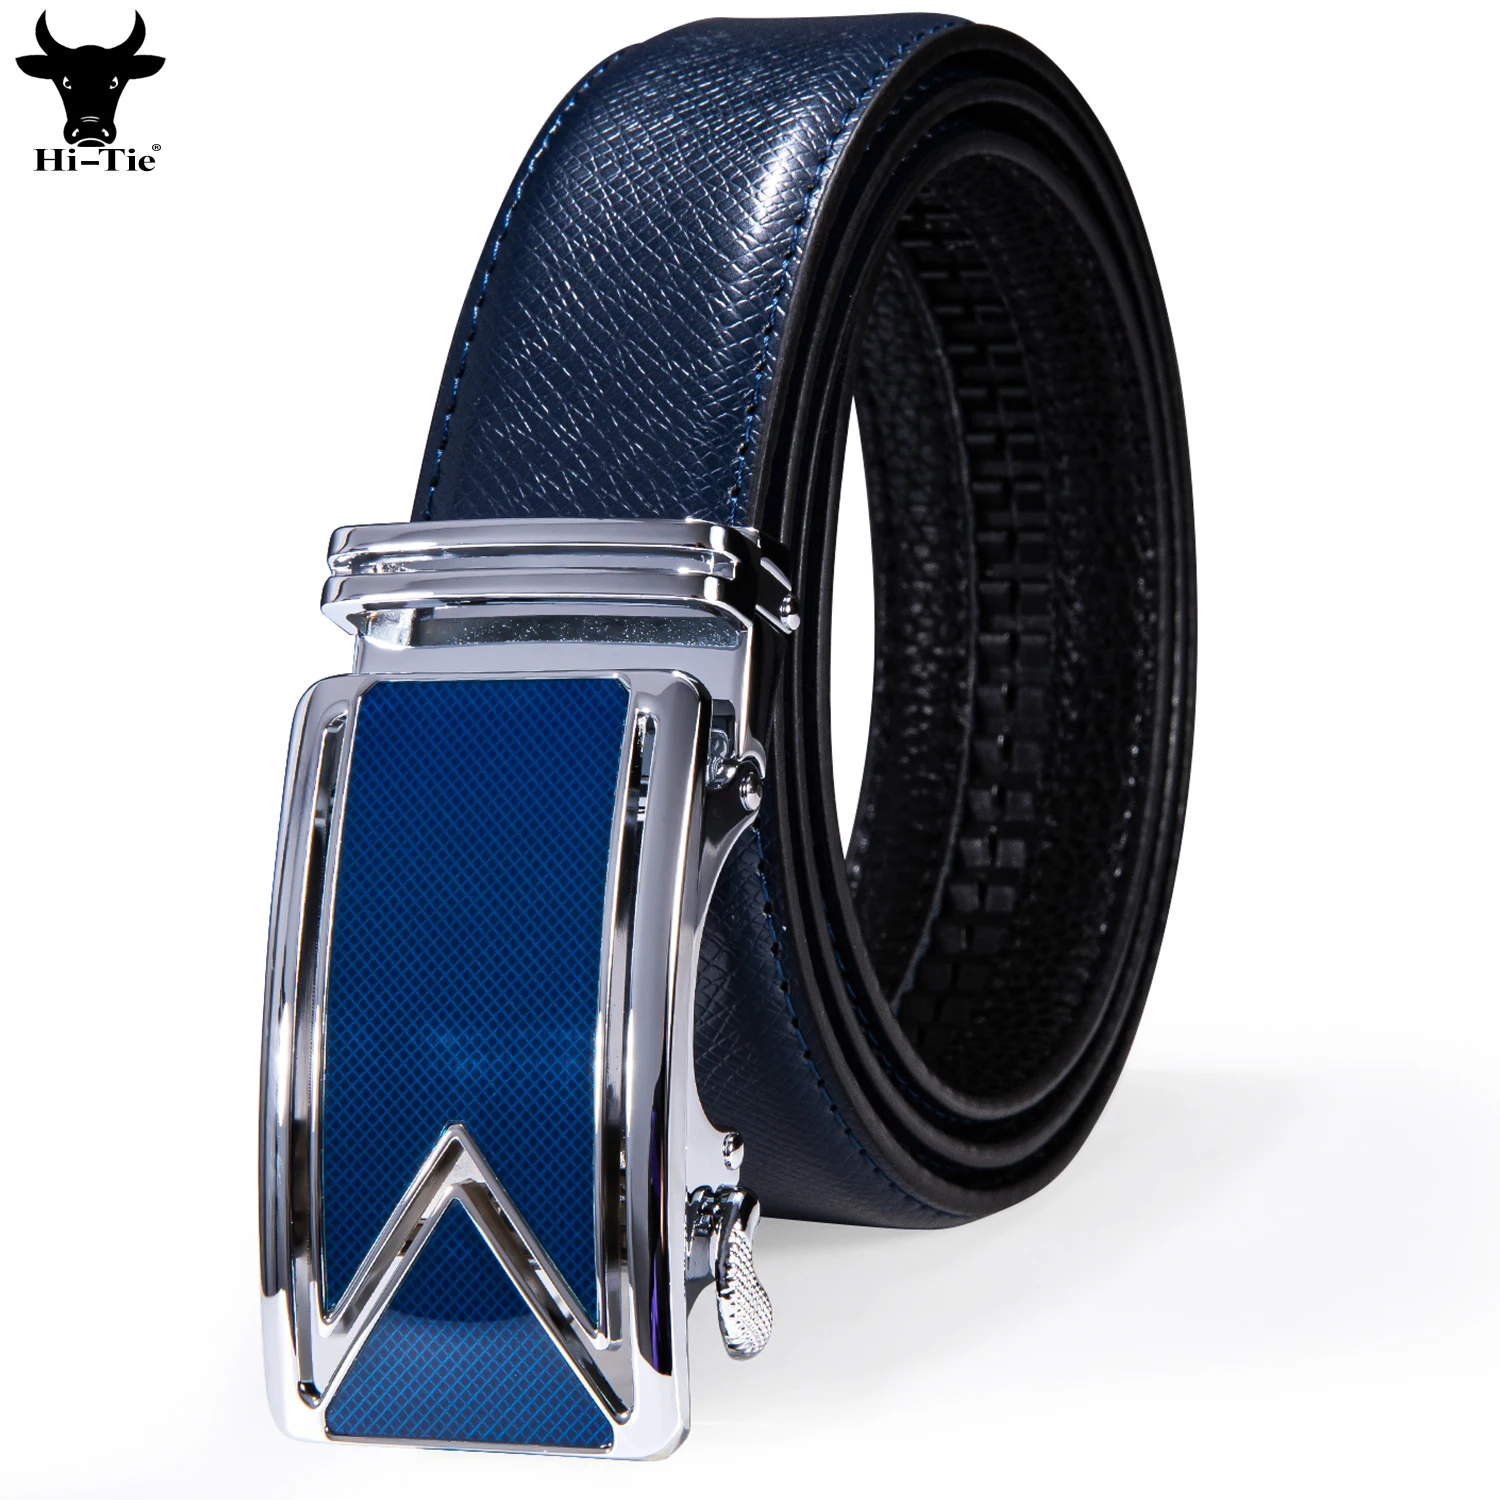 Hi-Tie Designer Automatic Buckles Mens Belts Blue Navy Genuine Leather Ratchet Waist Belt for Men Dress Jeans Wedding Business